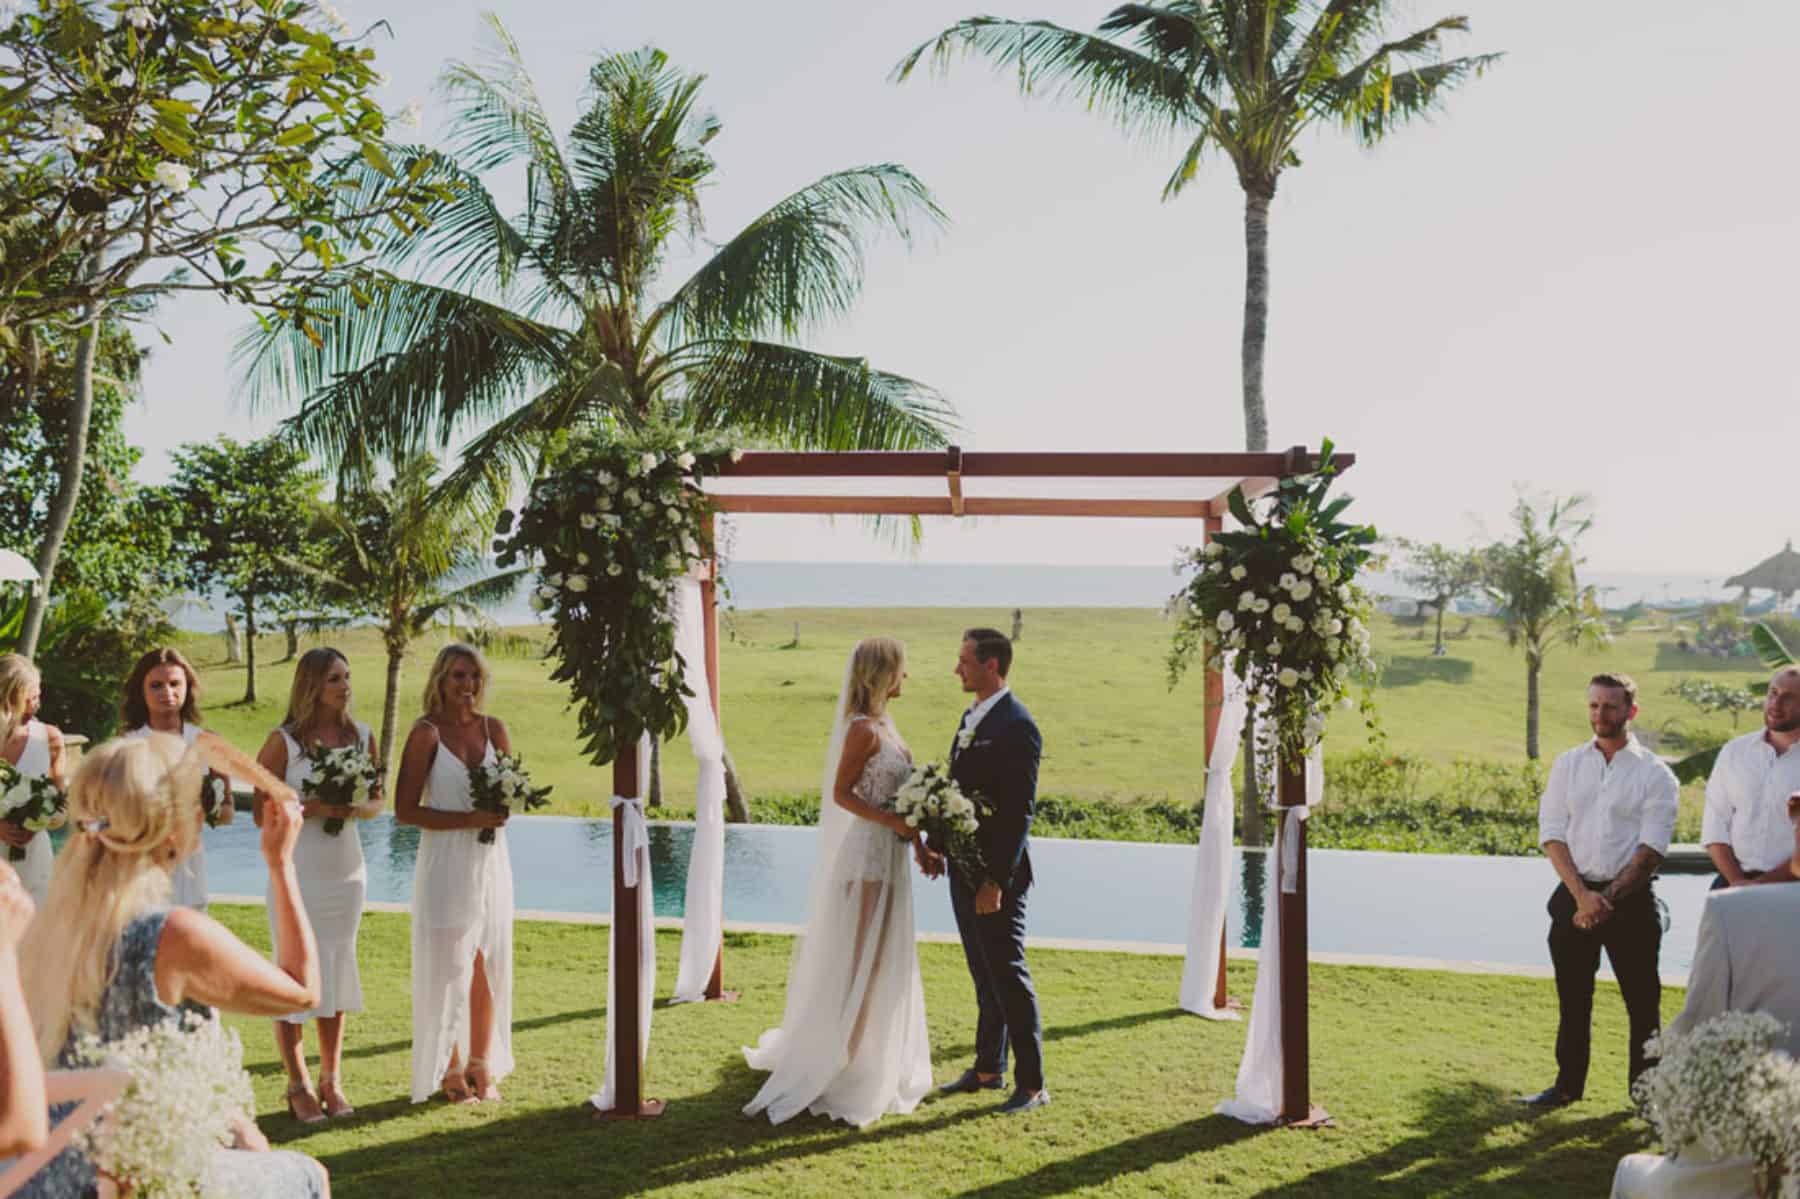 Top 10 weddings of 2017 | Meg & Jamie’s Beach Villa Wedding in Bali